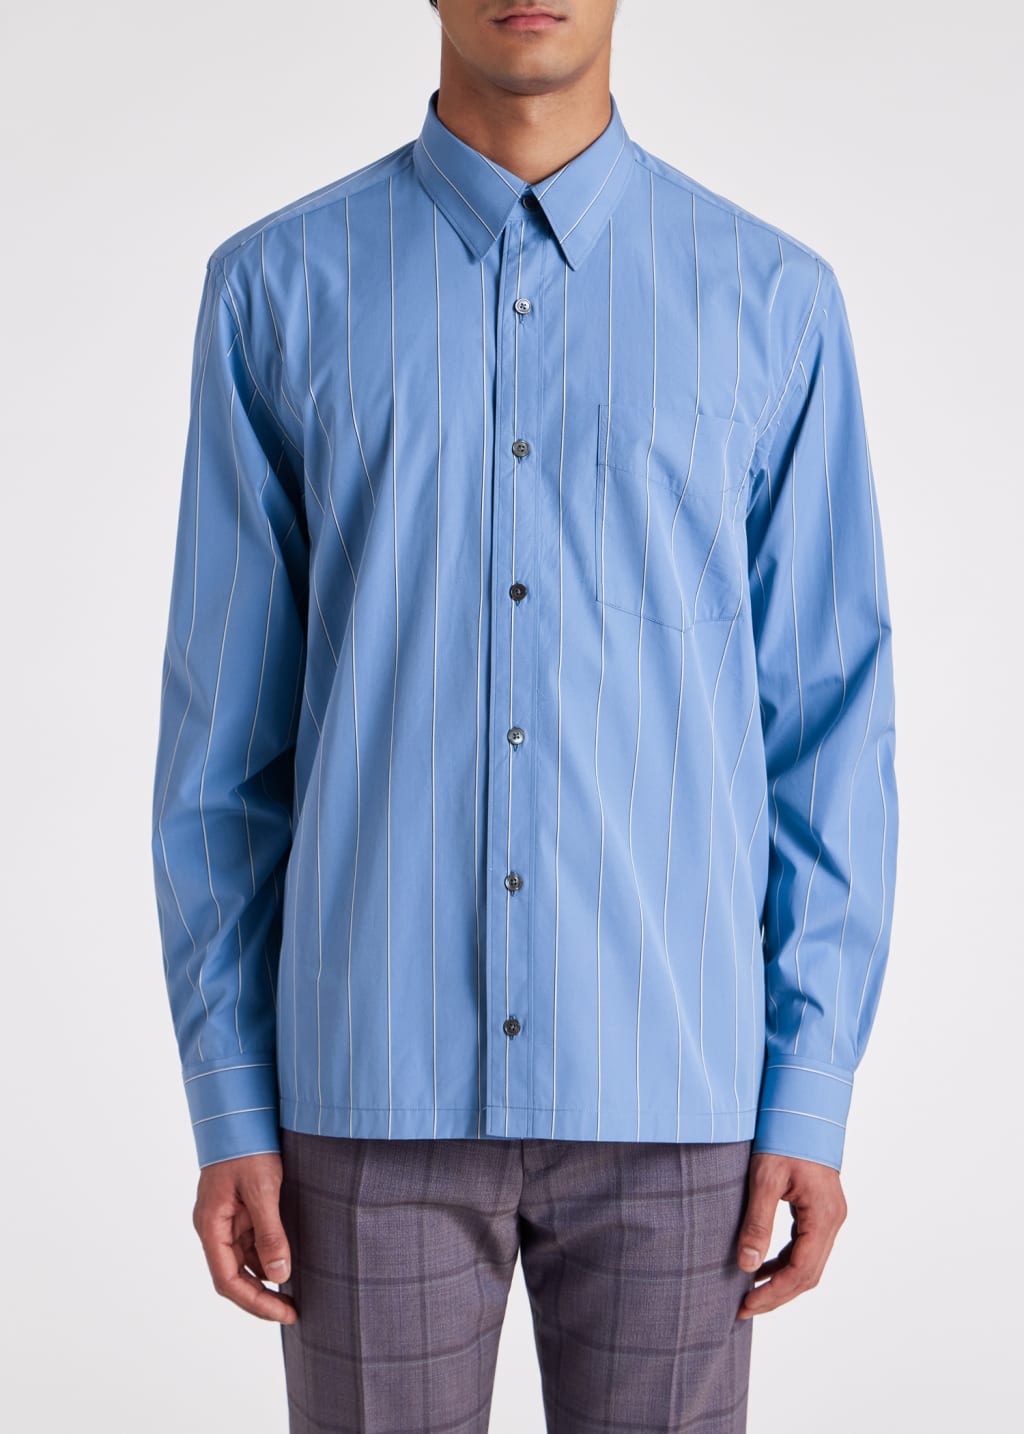 Model View - Blue Oversized Poplin Stripe Shirt Paul Smith